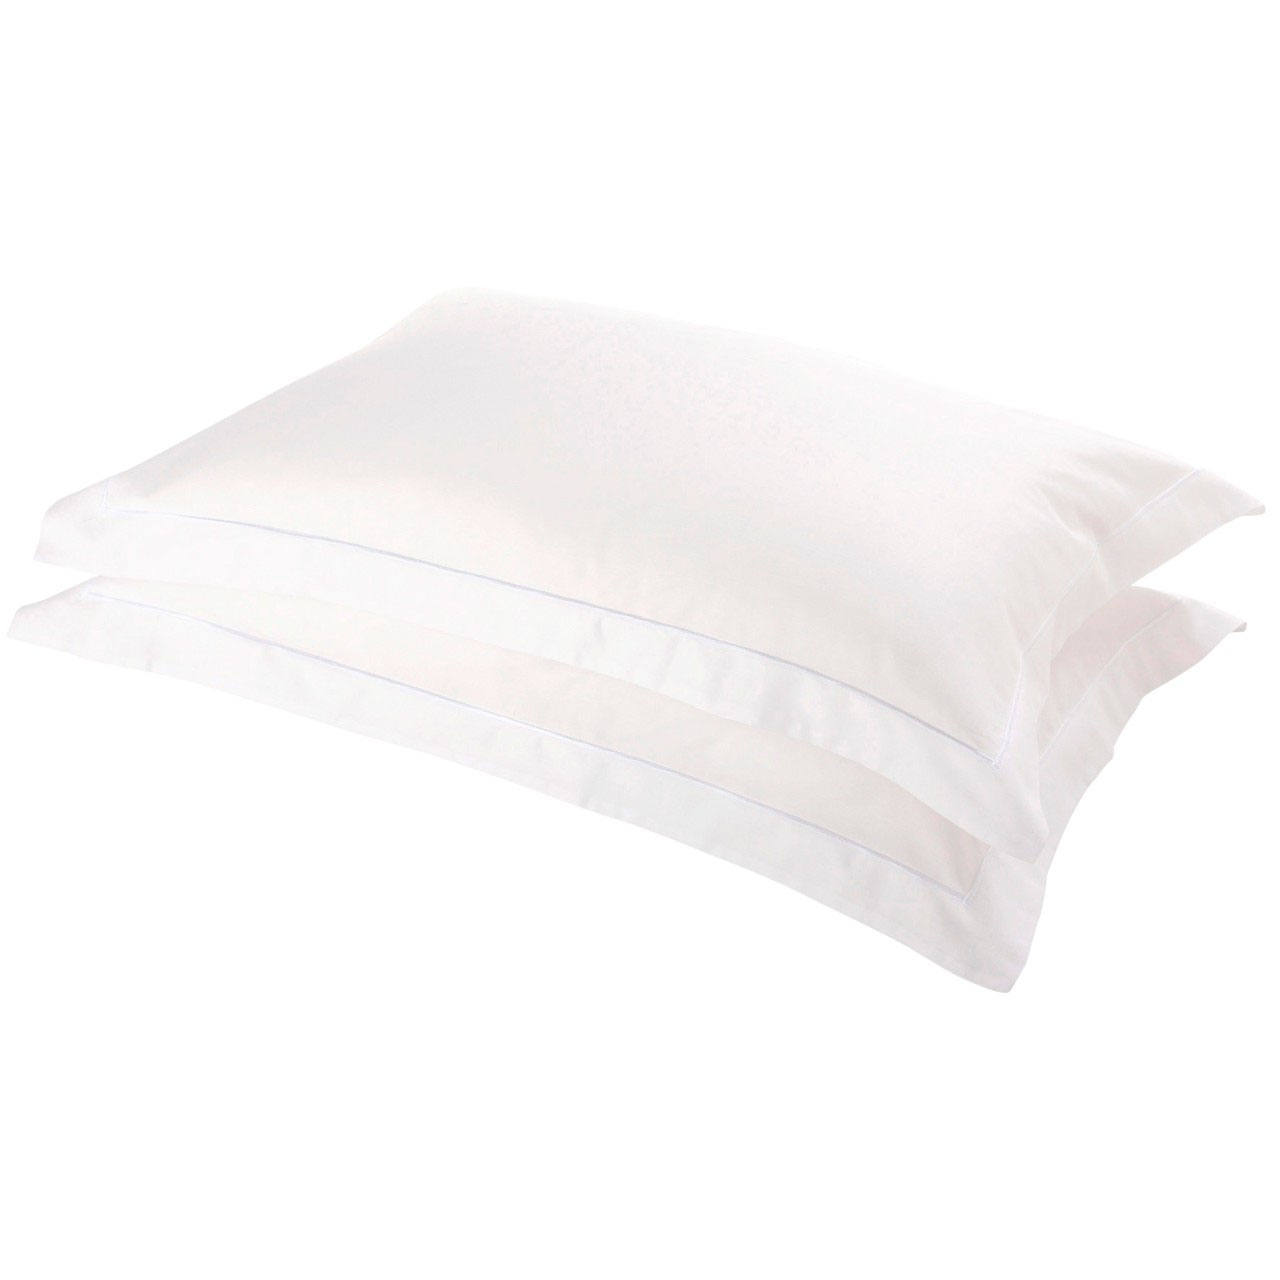 200 Thread Count Egyptian Cotton Oxford Pillowcases - Pair